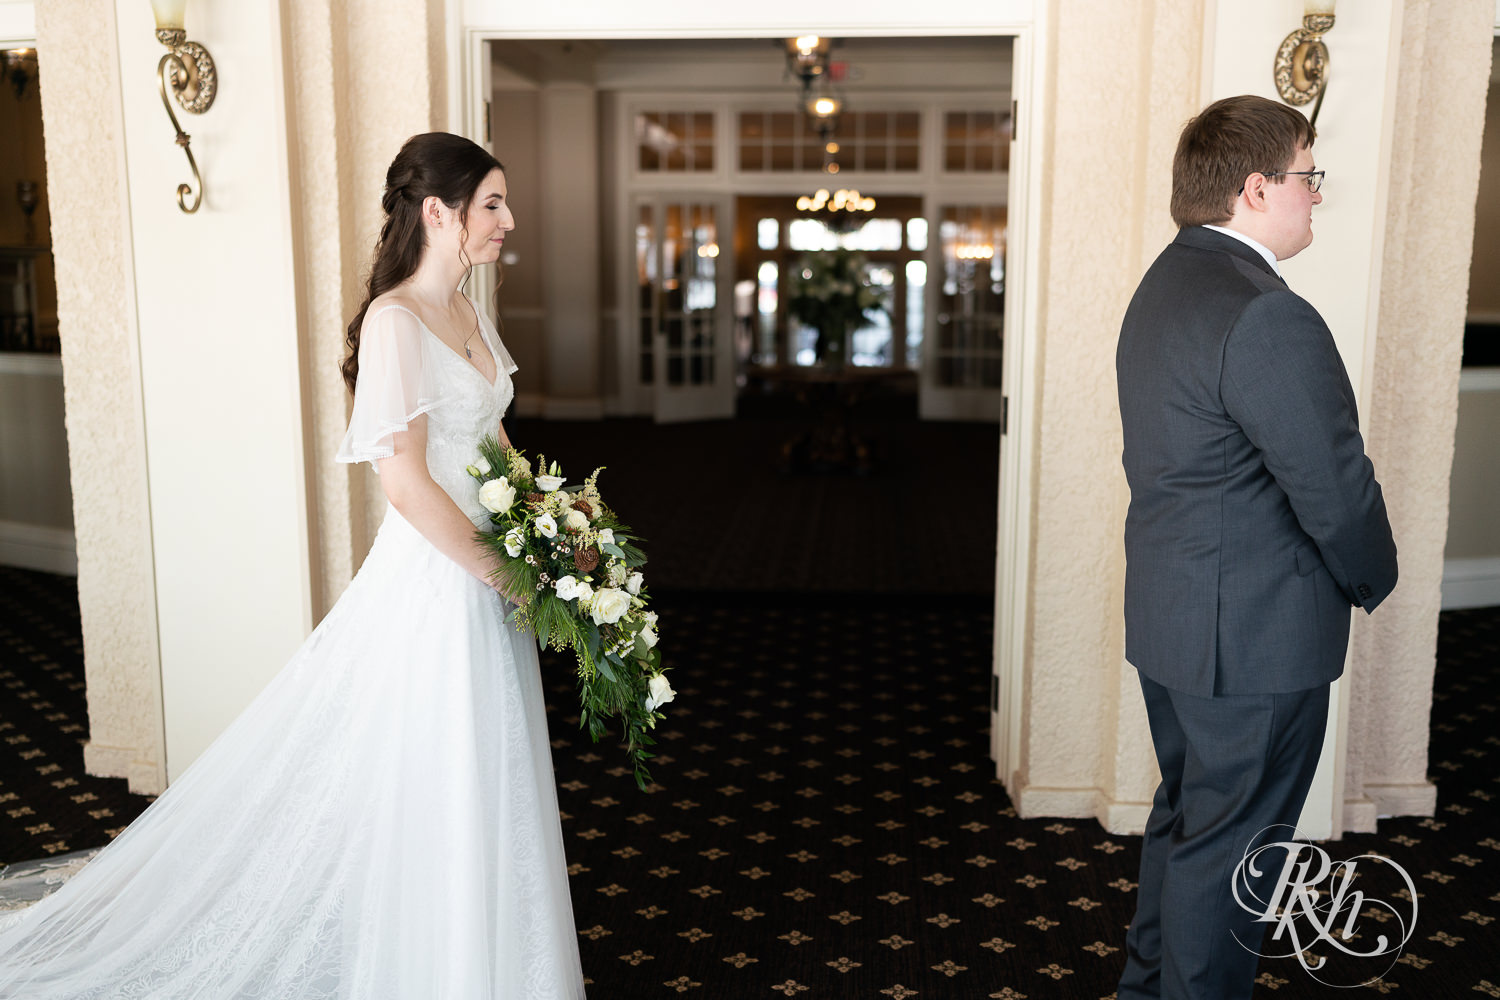 First look between bride and groom at Minneapolis Golf Club in Saint Louis Park, Minnesota.